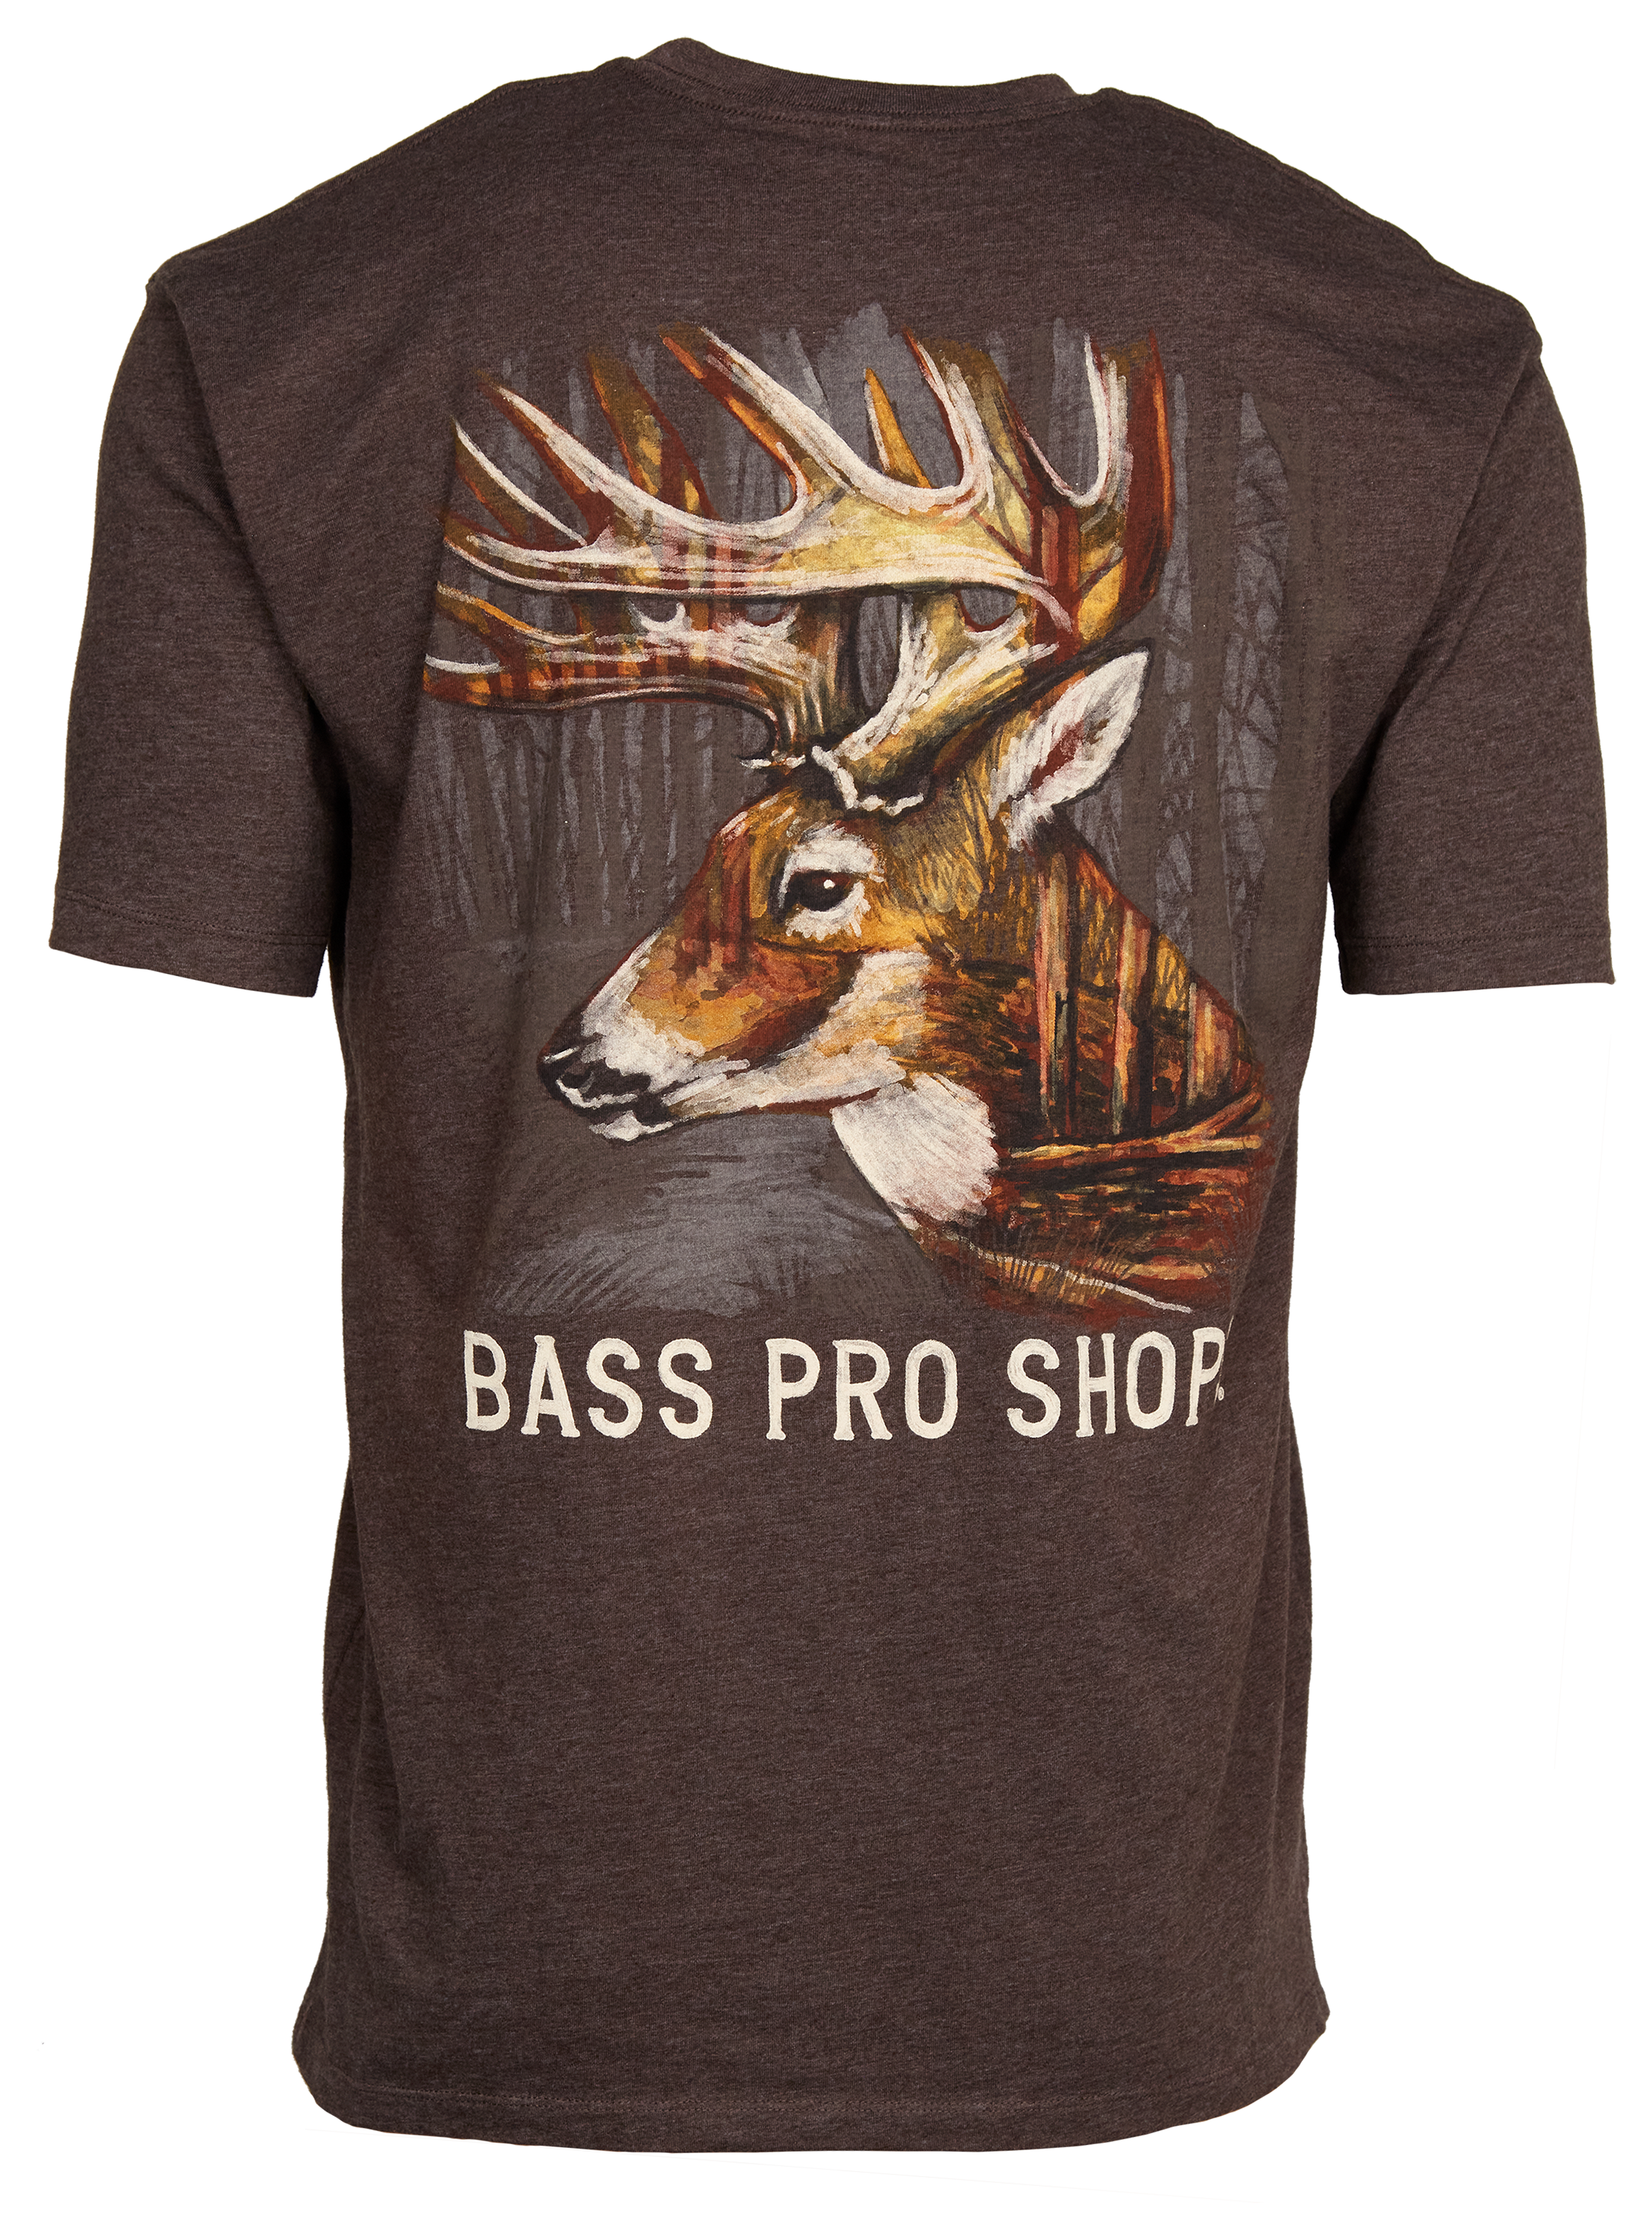 Bass Pro Shops Deer Wildlife Graphic Short-Sleeve T-Shirt for Men